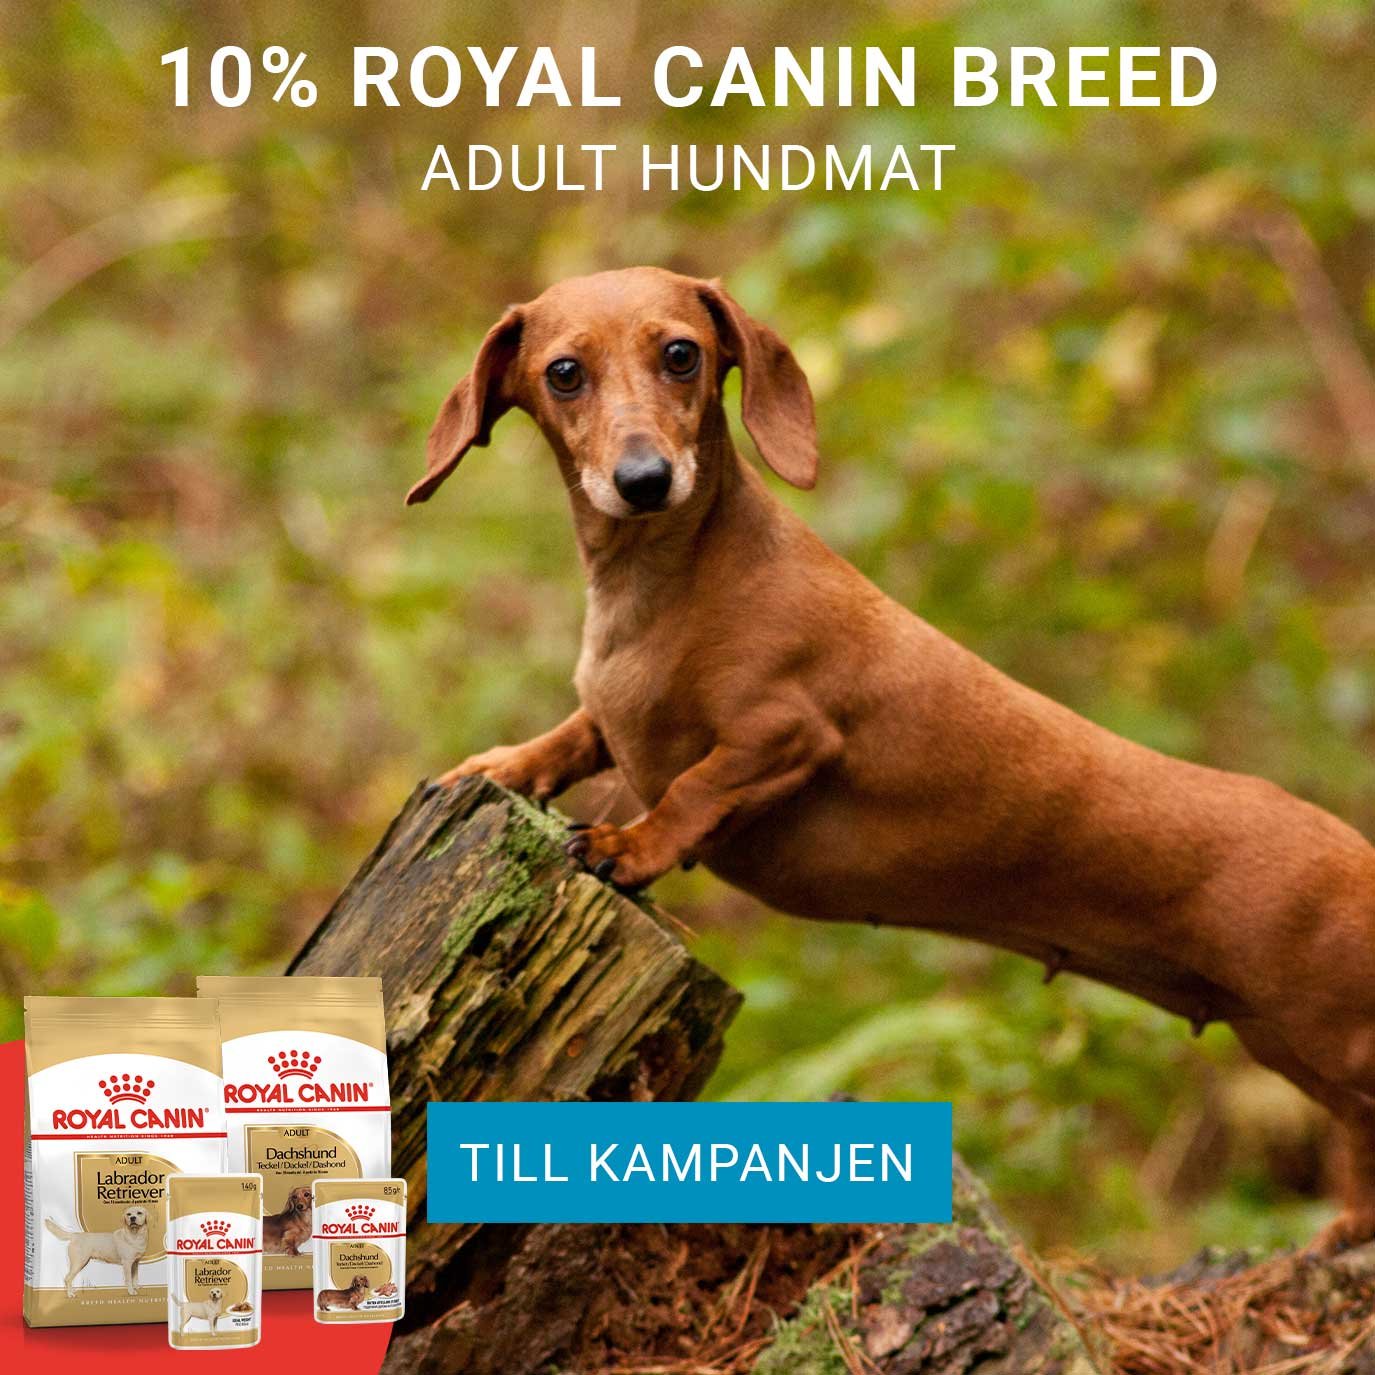 Kampanj Royal Canin Breed hund